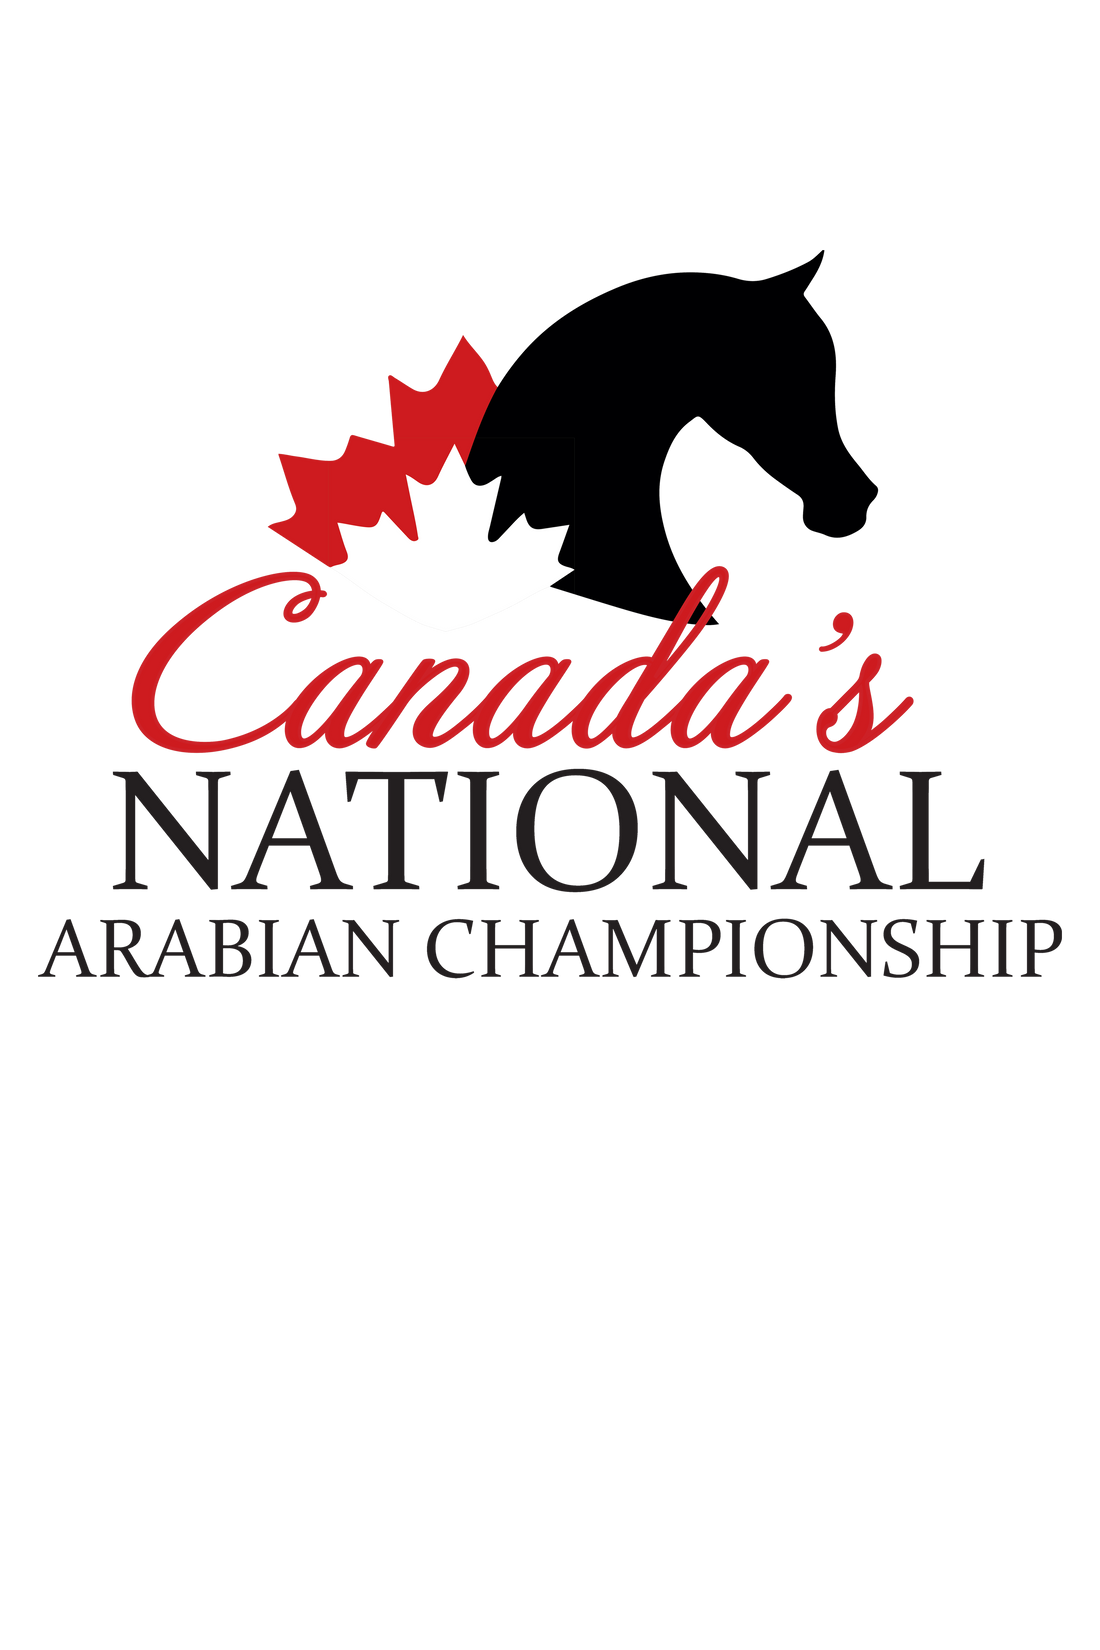 Canadian National Arabian Championship